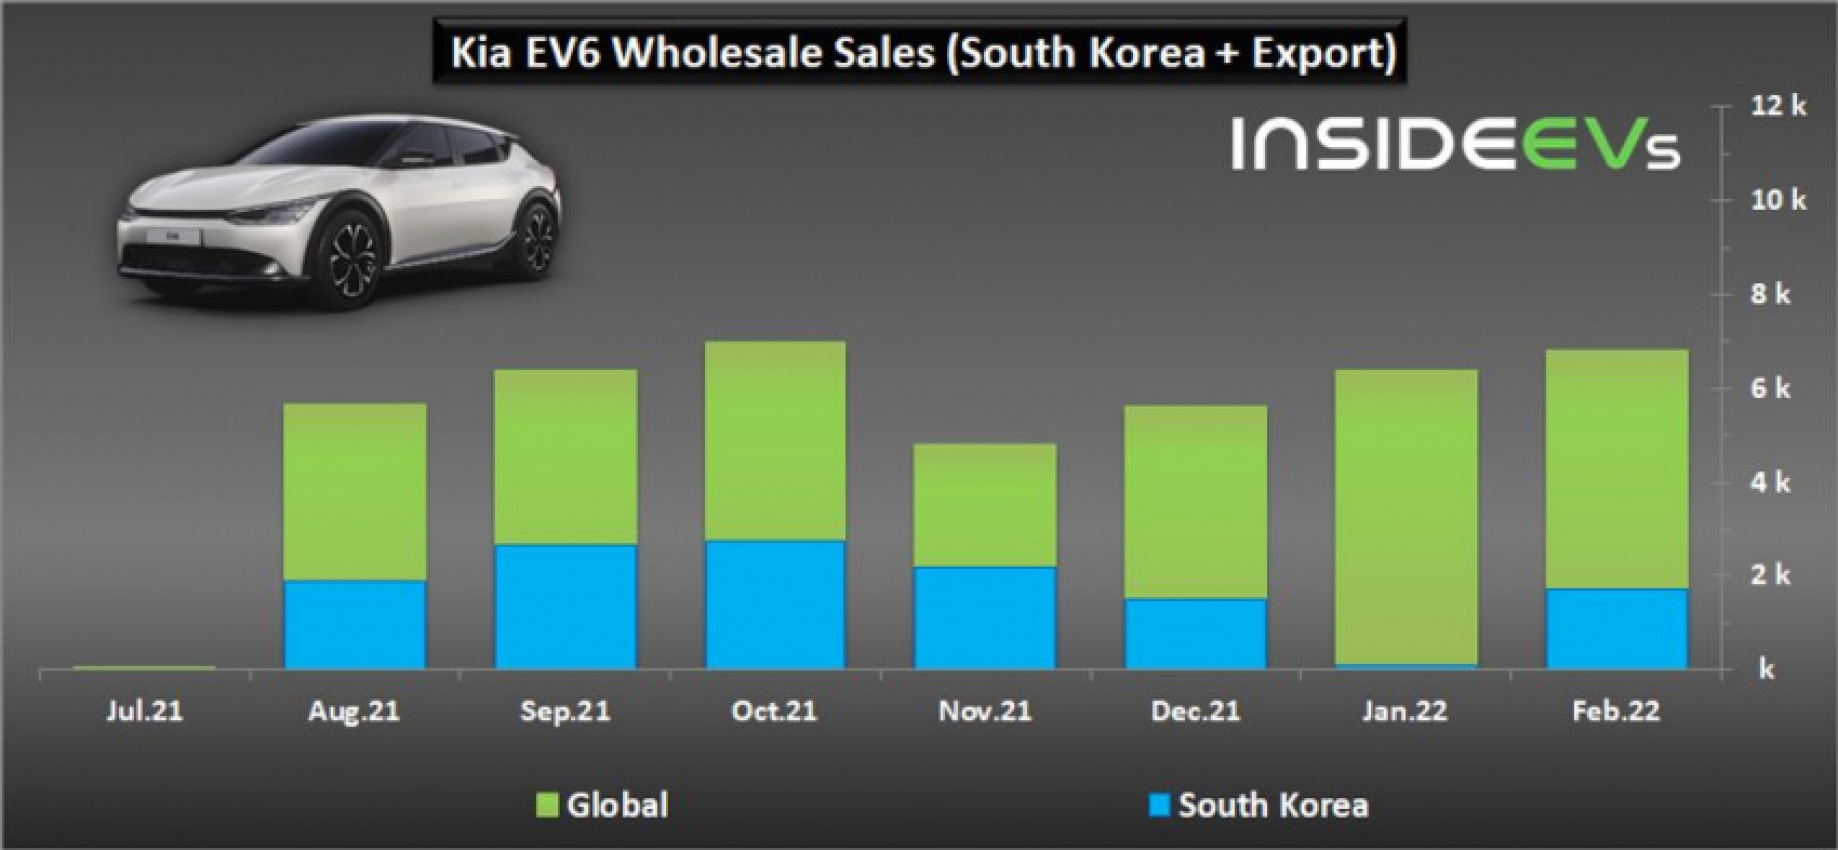 autos, cars, evs, kia, kia ev6 wholesale shipments near 7,000 in february 2022